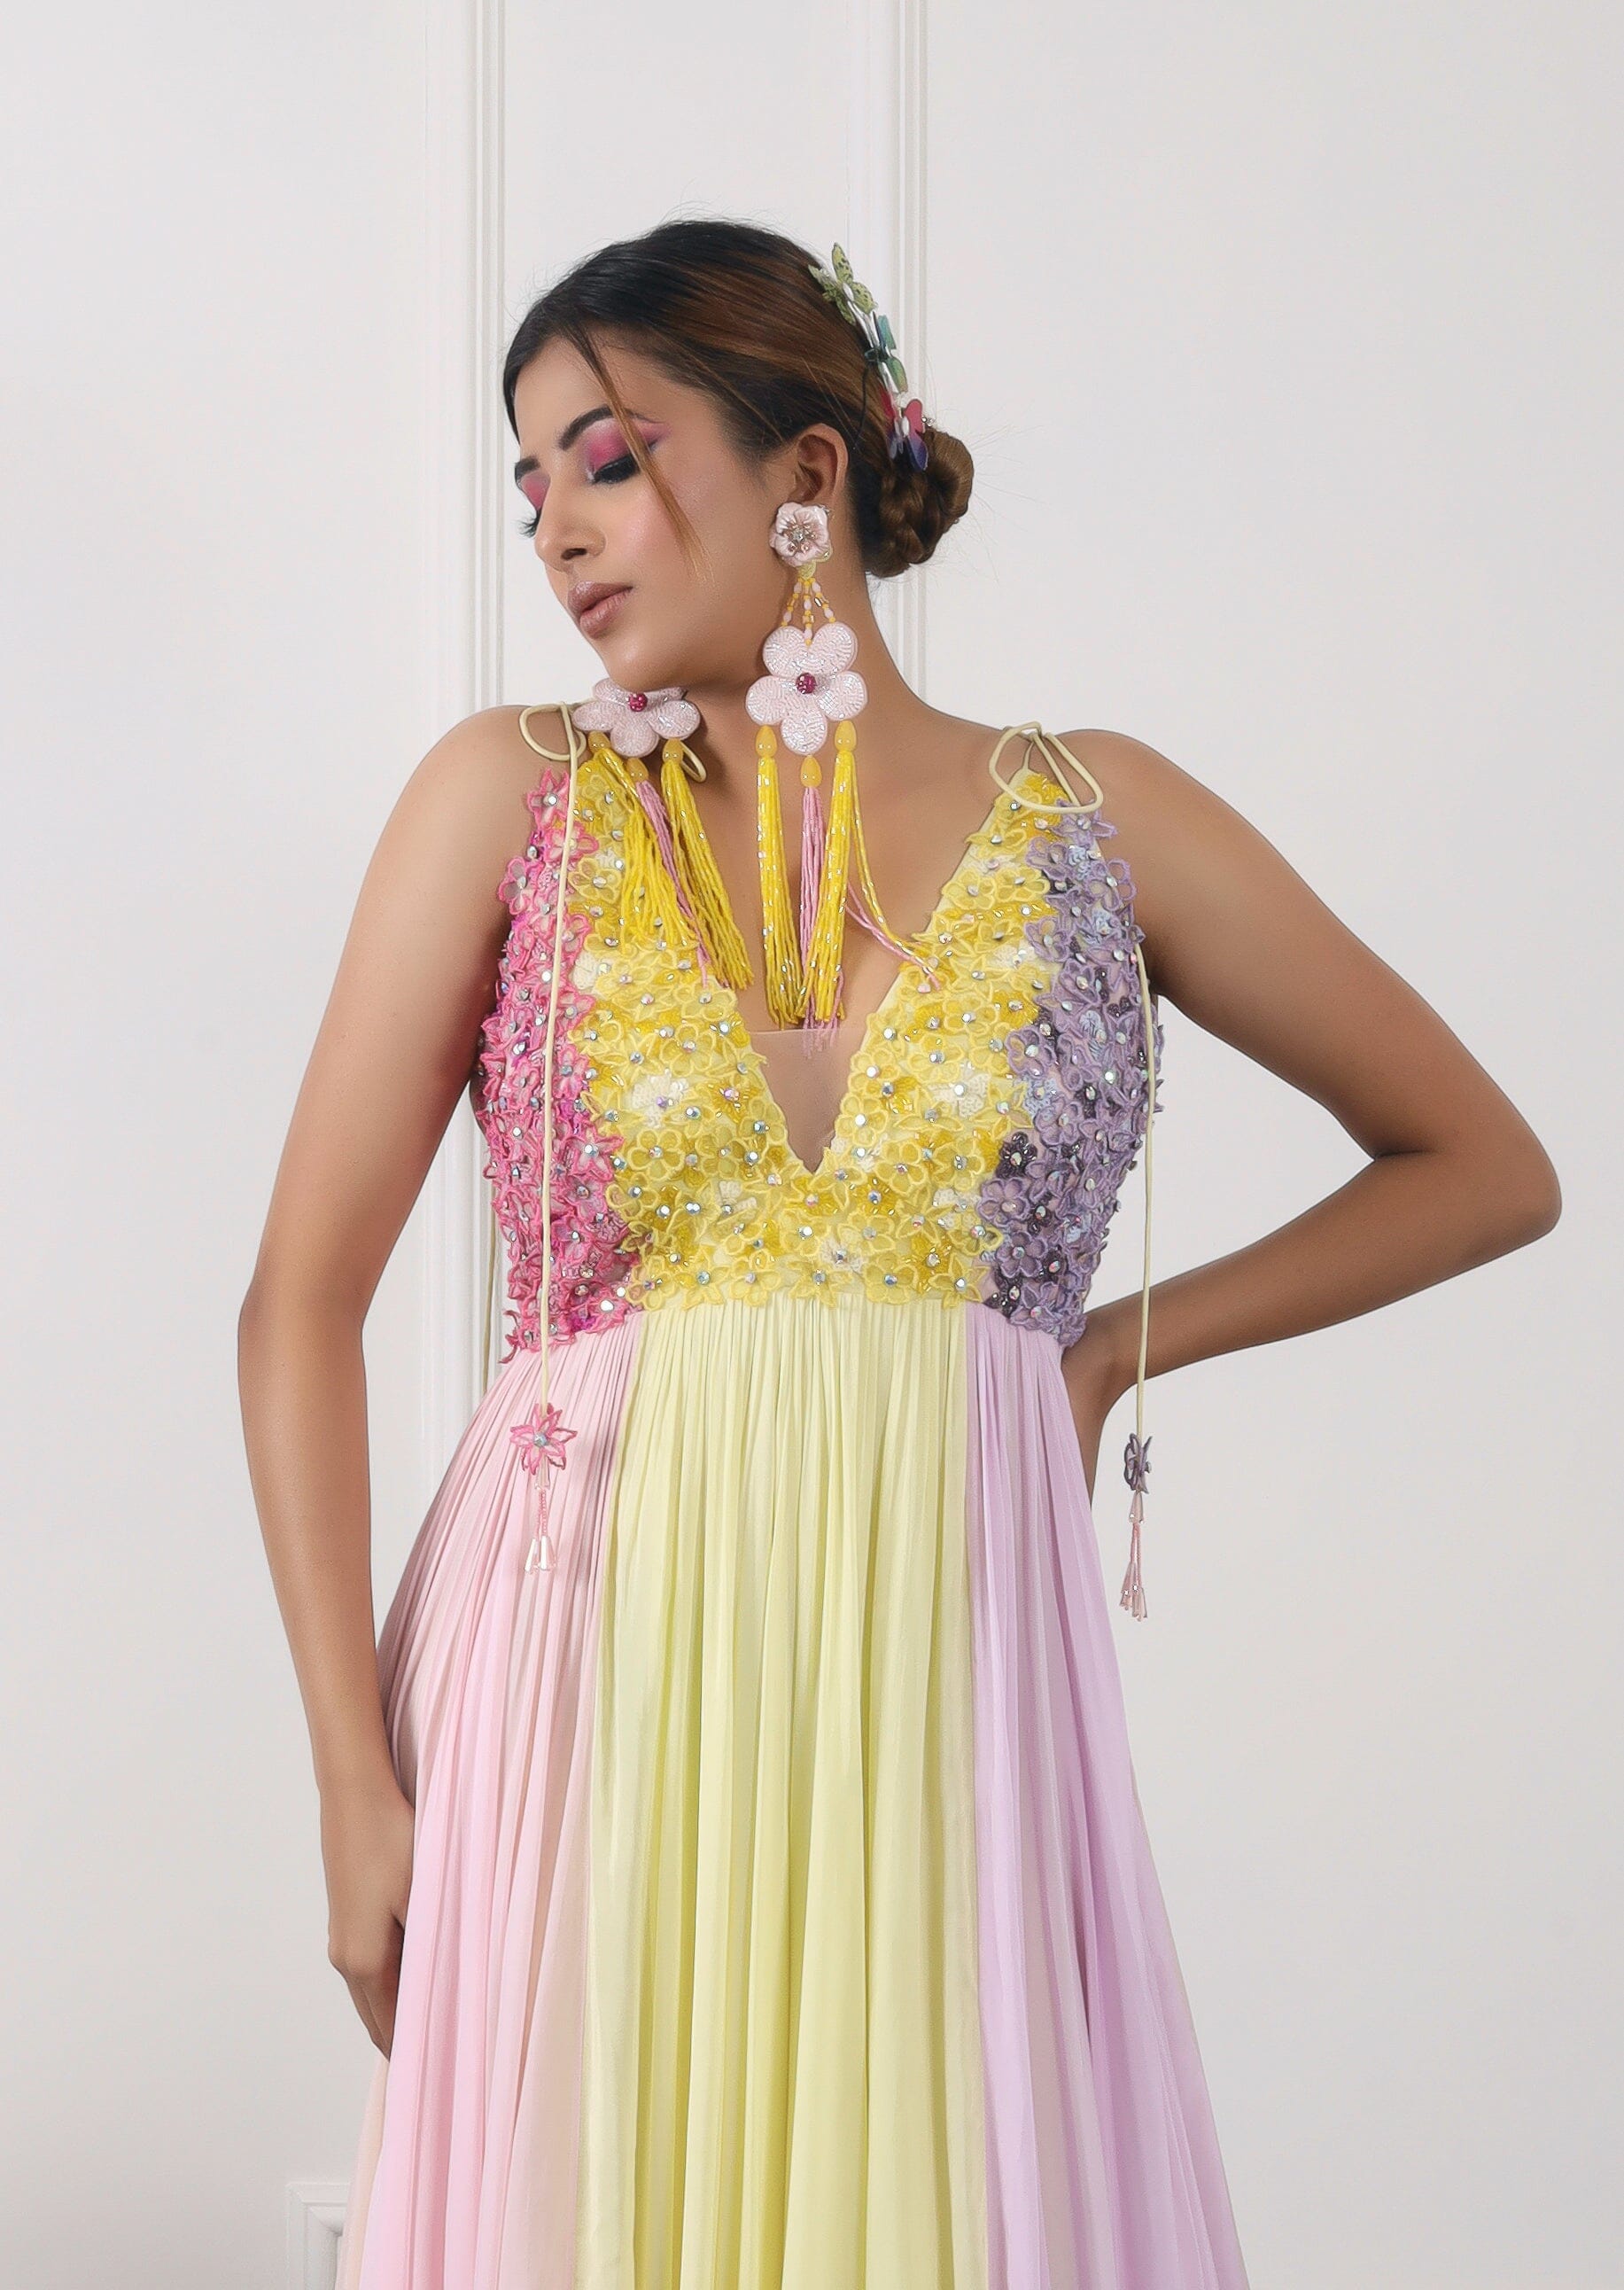 A 50's Inspired Tea-Length Dress for a Pastel Colour London Pub Wedding |  Love My Dress®, UK Wedding Blog, Podcast, Directory & Shop